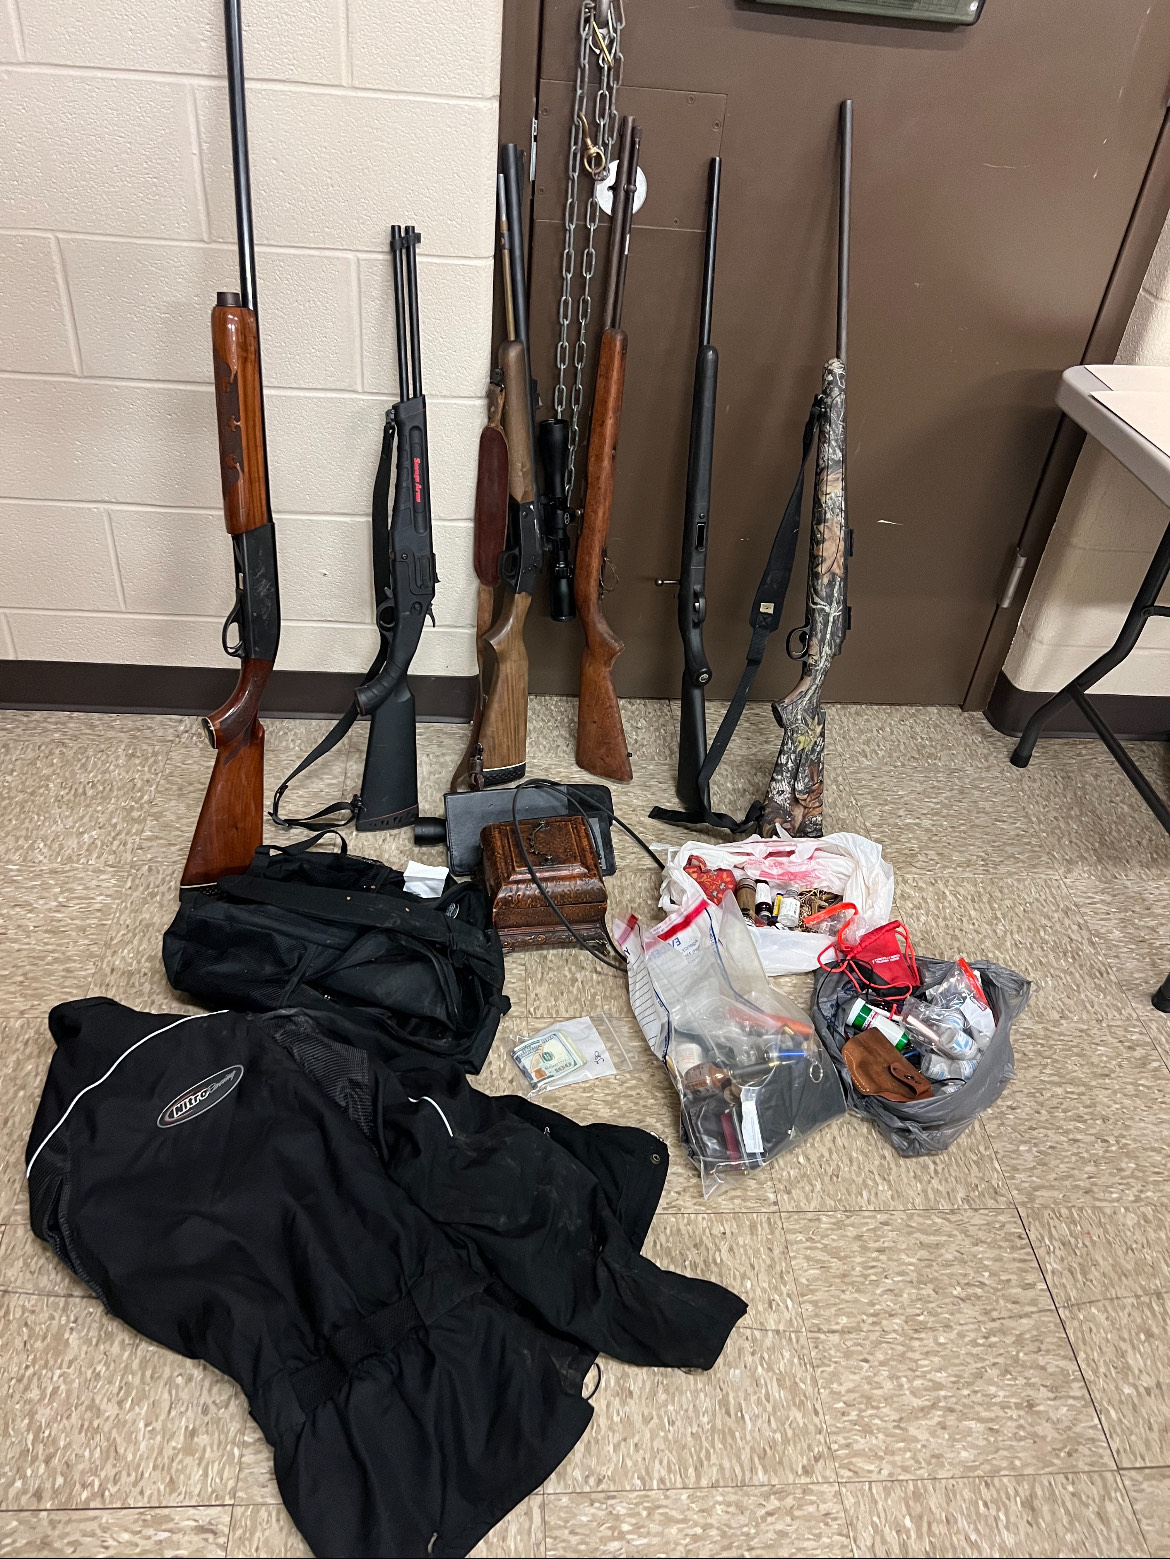 Burglary investigation yields guns, stolen items